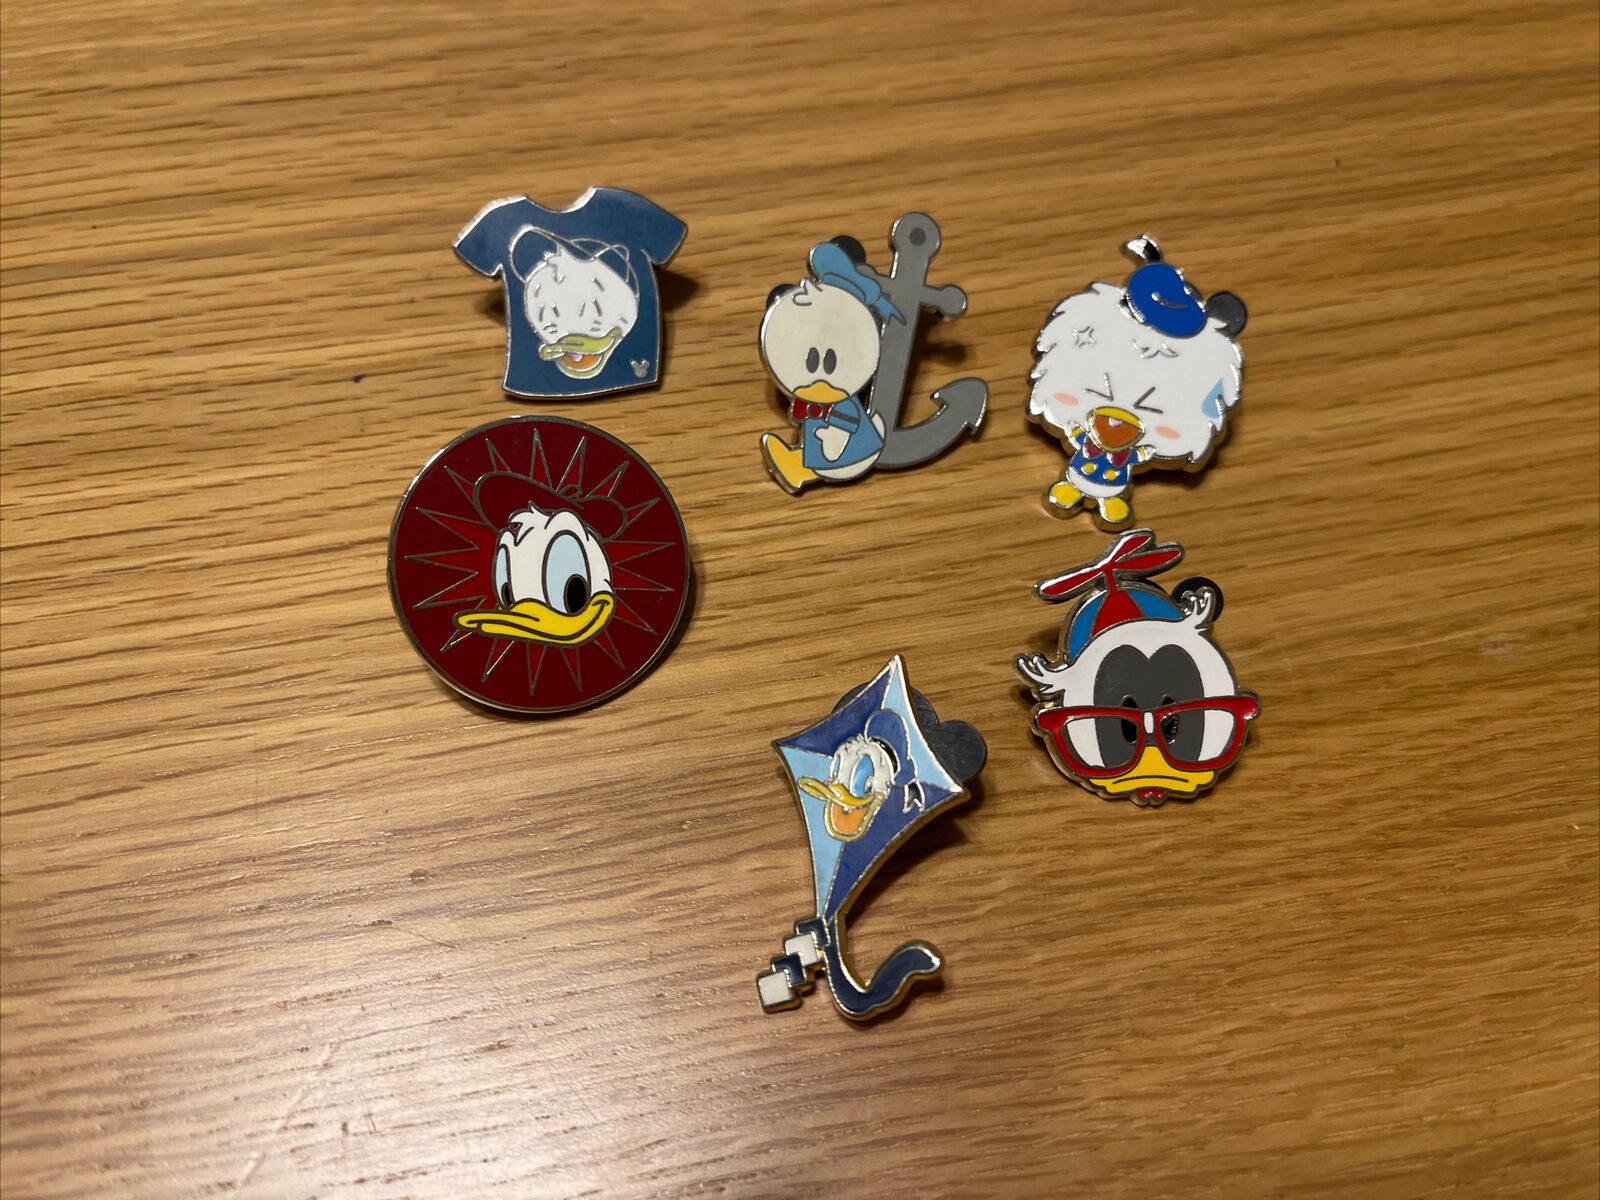 6 Piece Donald Duck Disney Trading Pin Lot